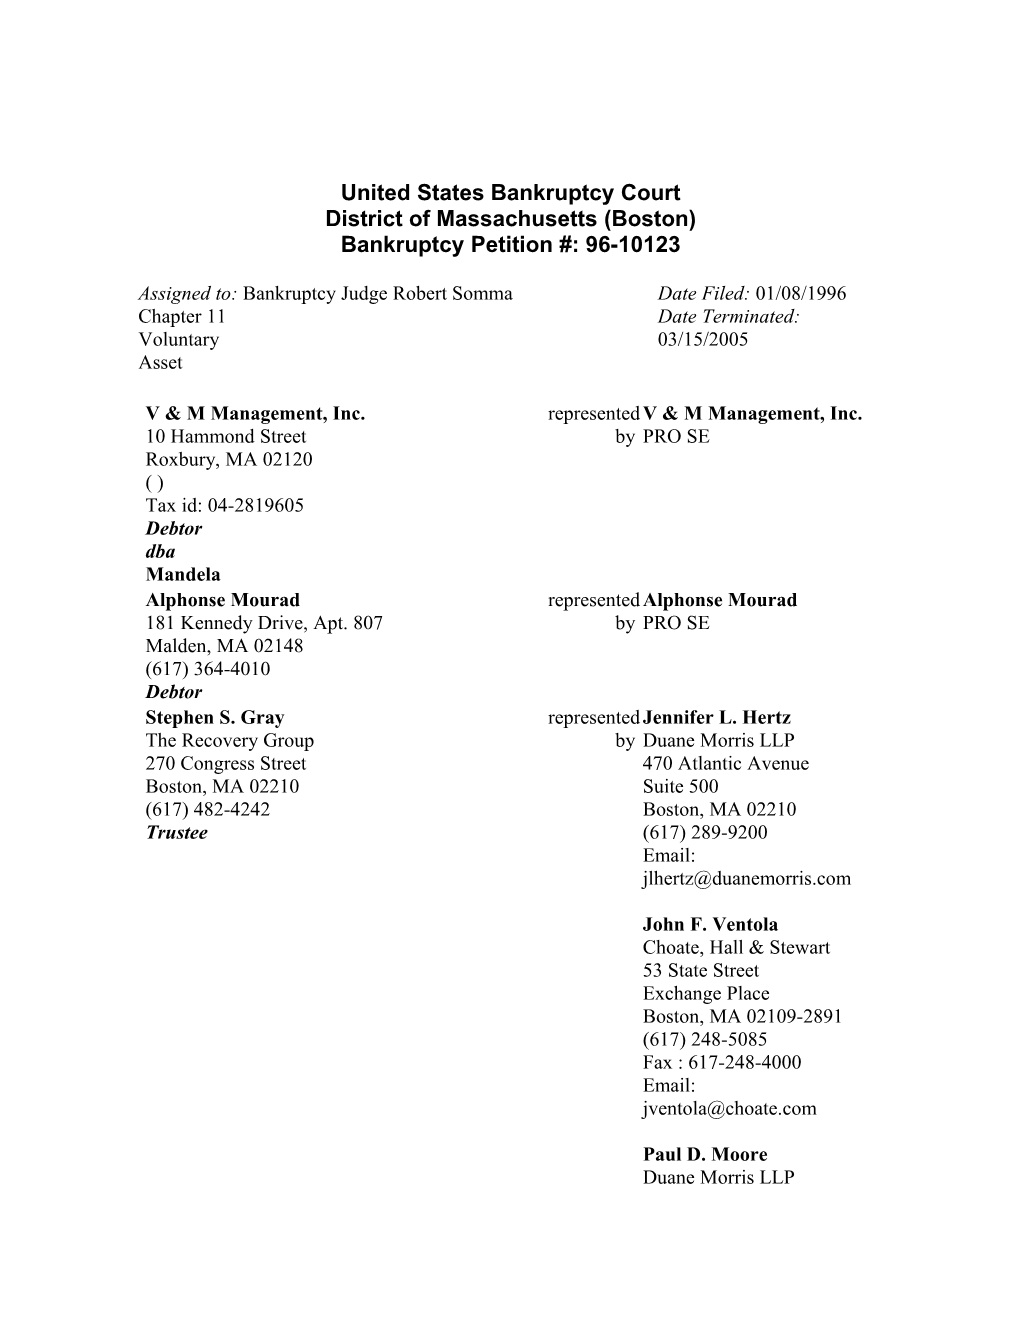 United Statesbankruptcycourt District of Massachusetts (Boston) Bankruptcy Petition